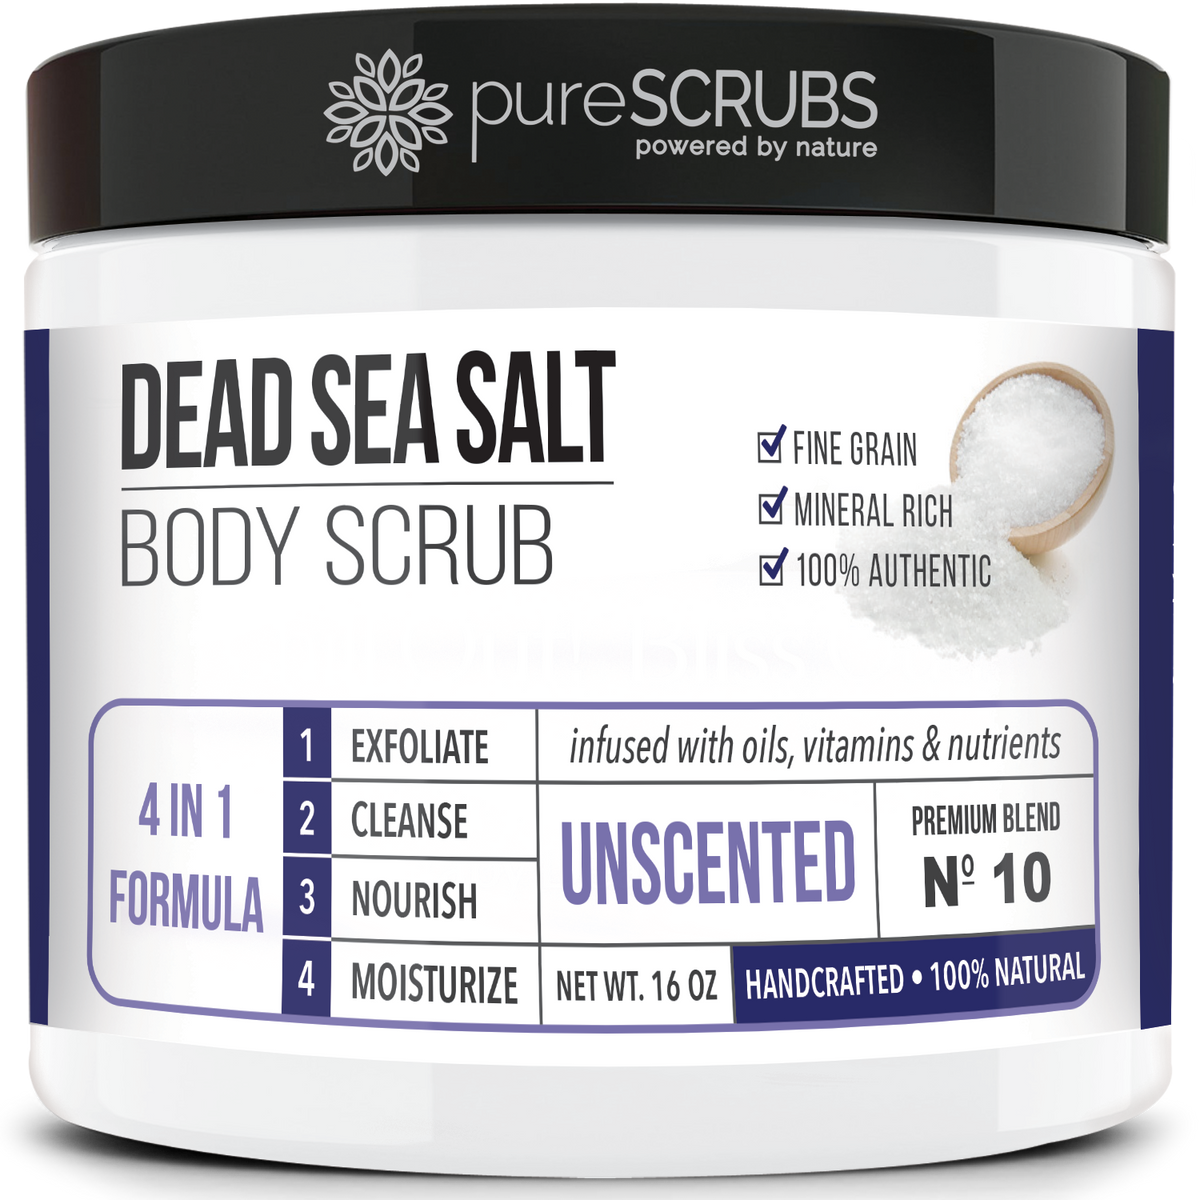 Unscented Body Scrub / Dead Sea Salt / Premium Blend #10